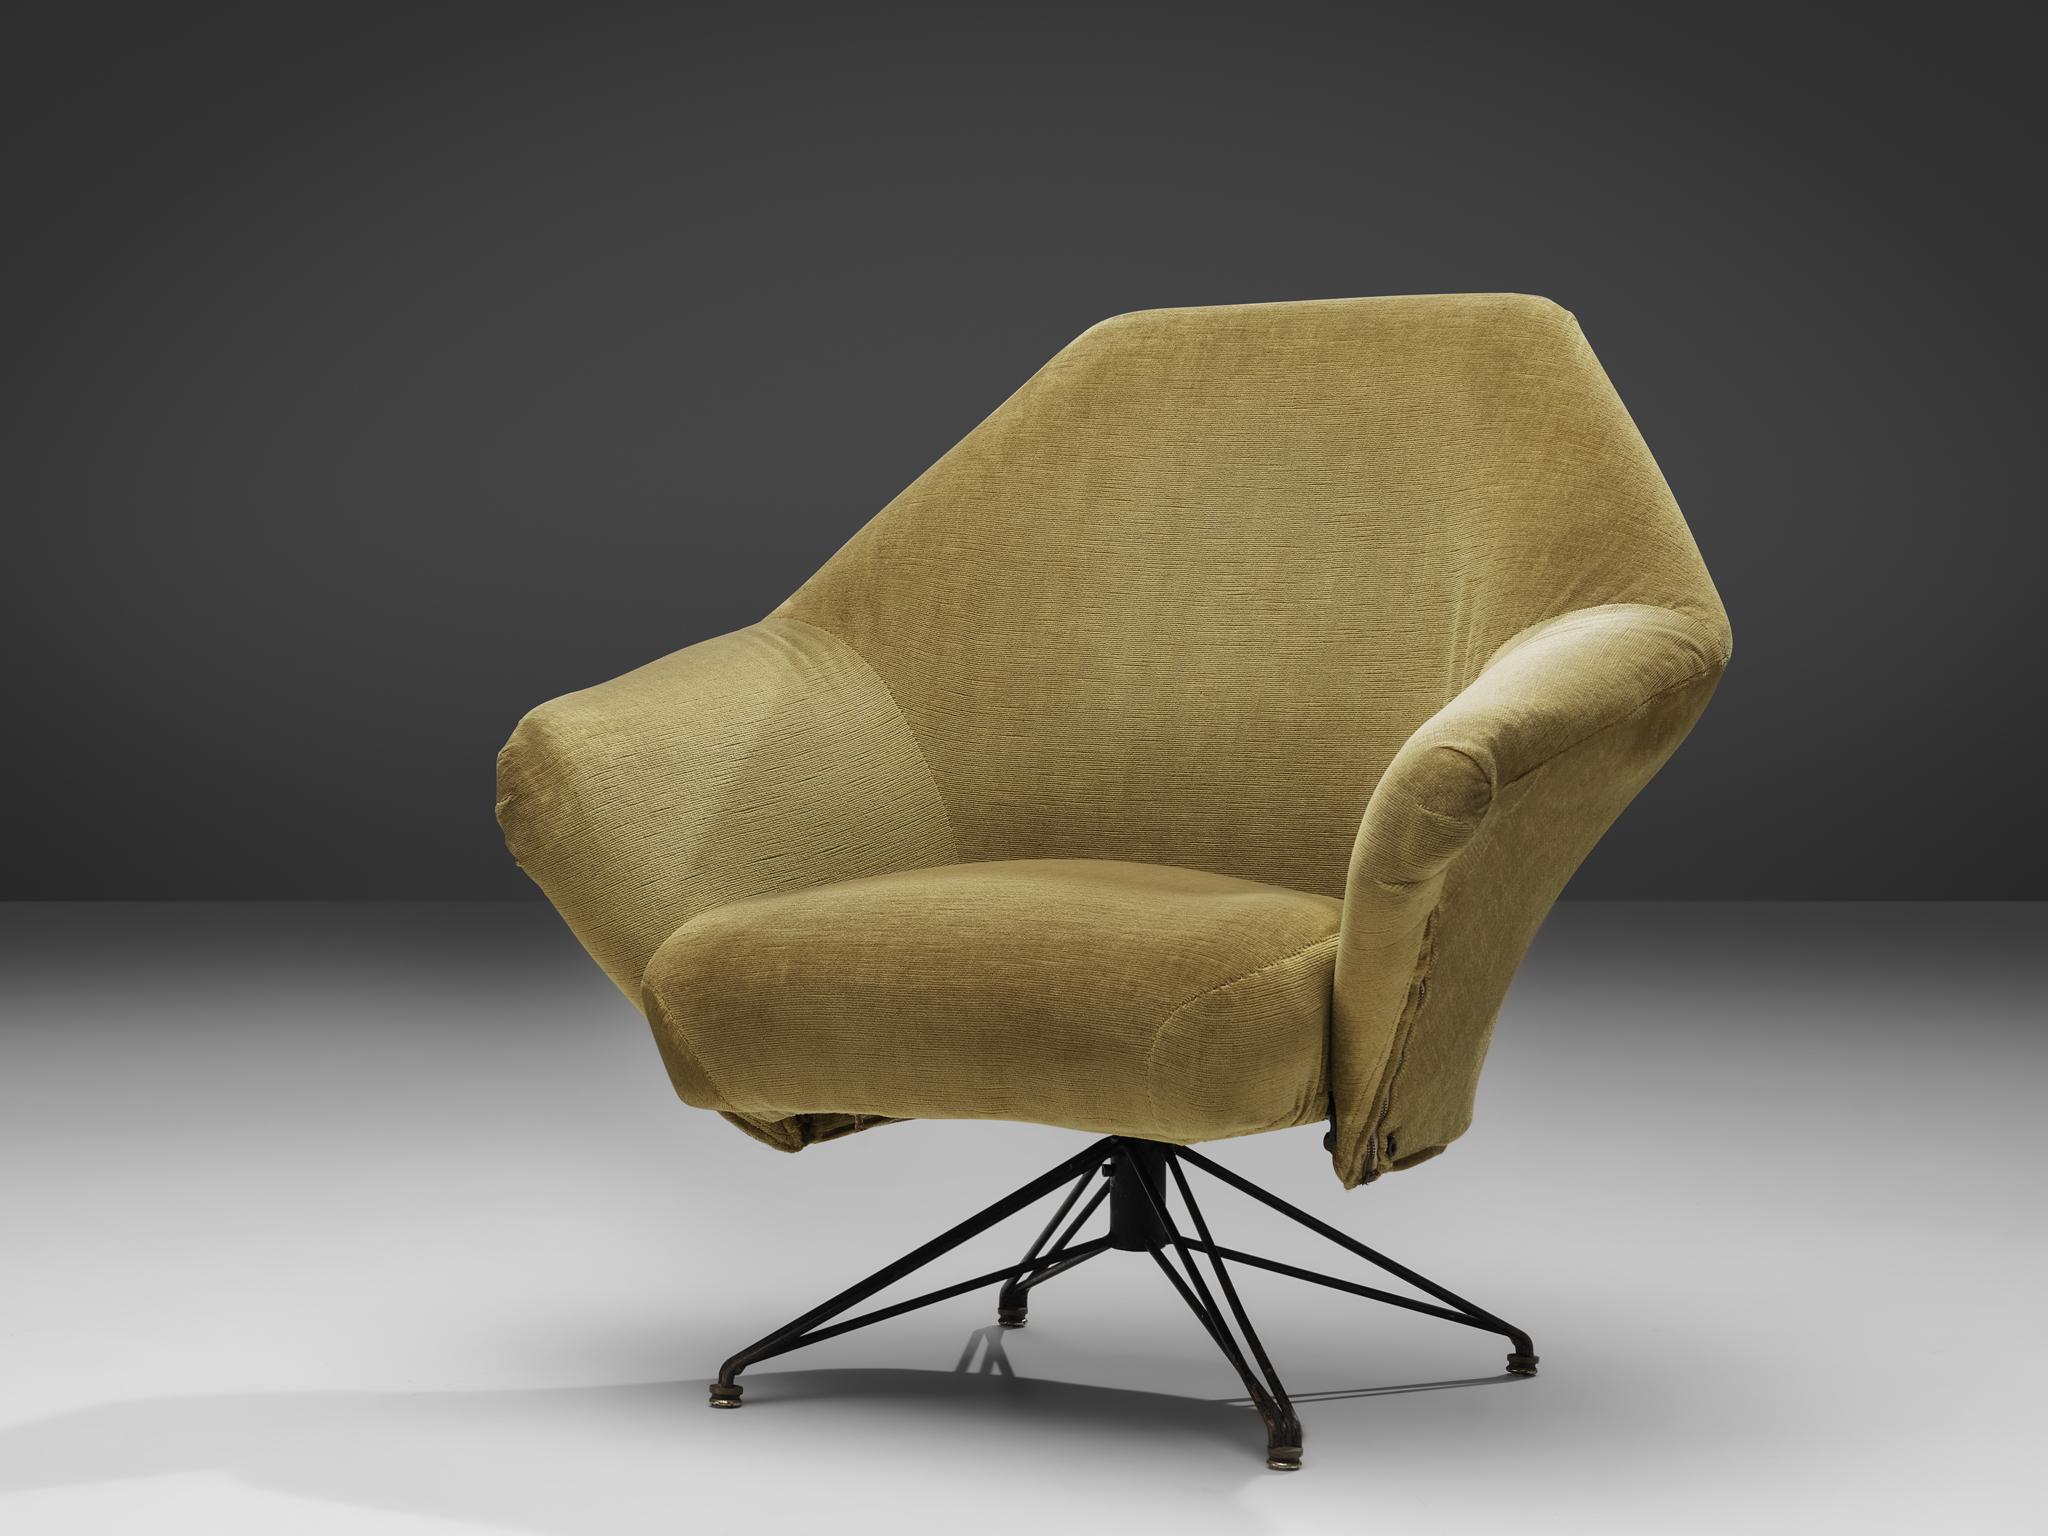 Osvaldo Borsani pour Tecno, fauteuil modèle P32, velours, métal, laiton, Italie, 1956

Osvaldo Borsani a conçu le 